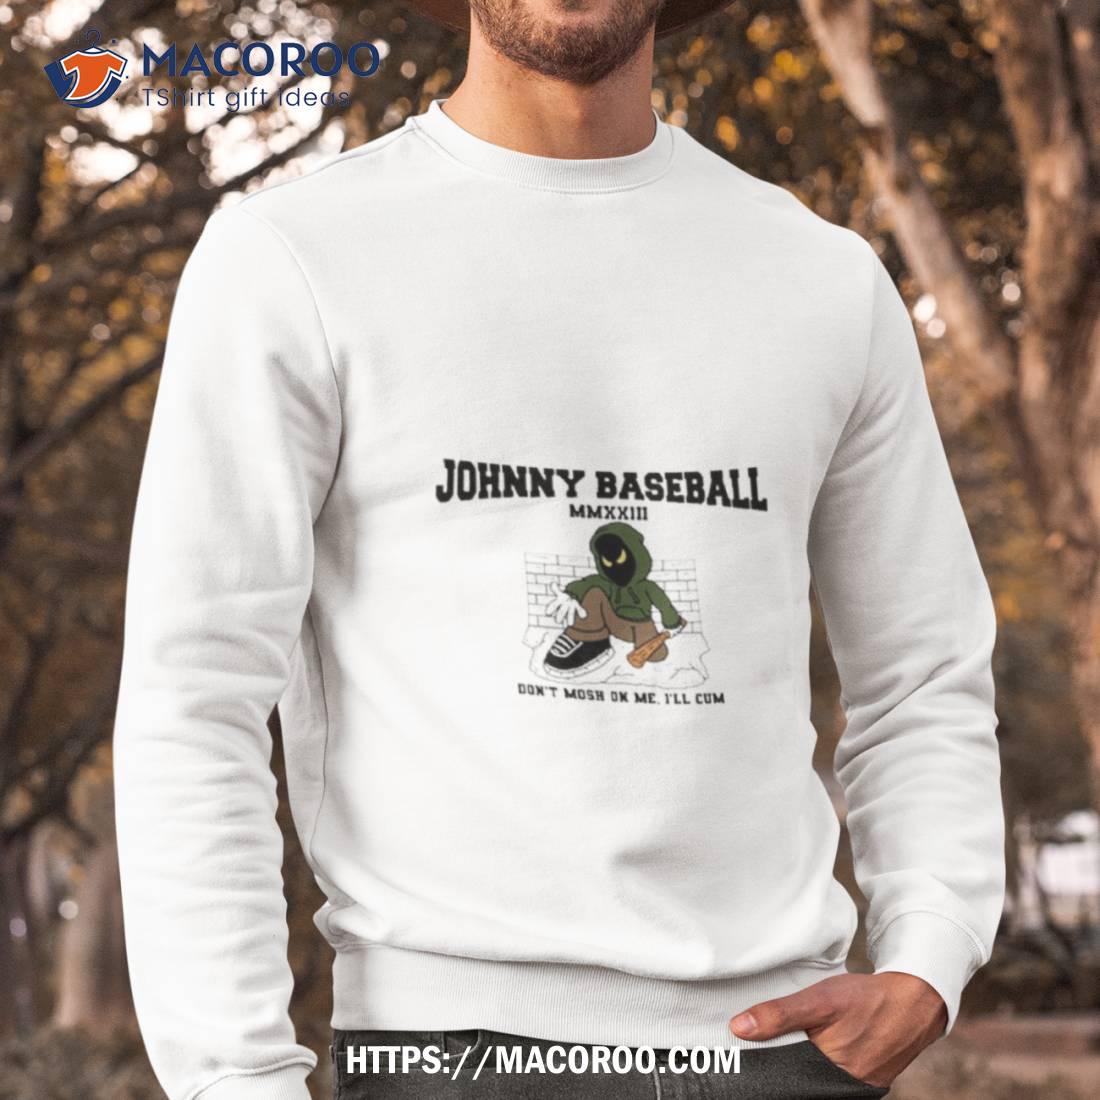 Johnny Baseball Don't Mosh On Me I'll Cum Shirt